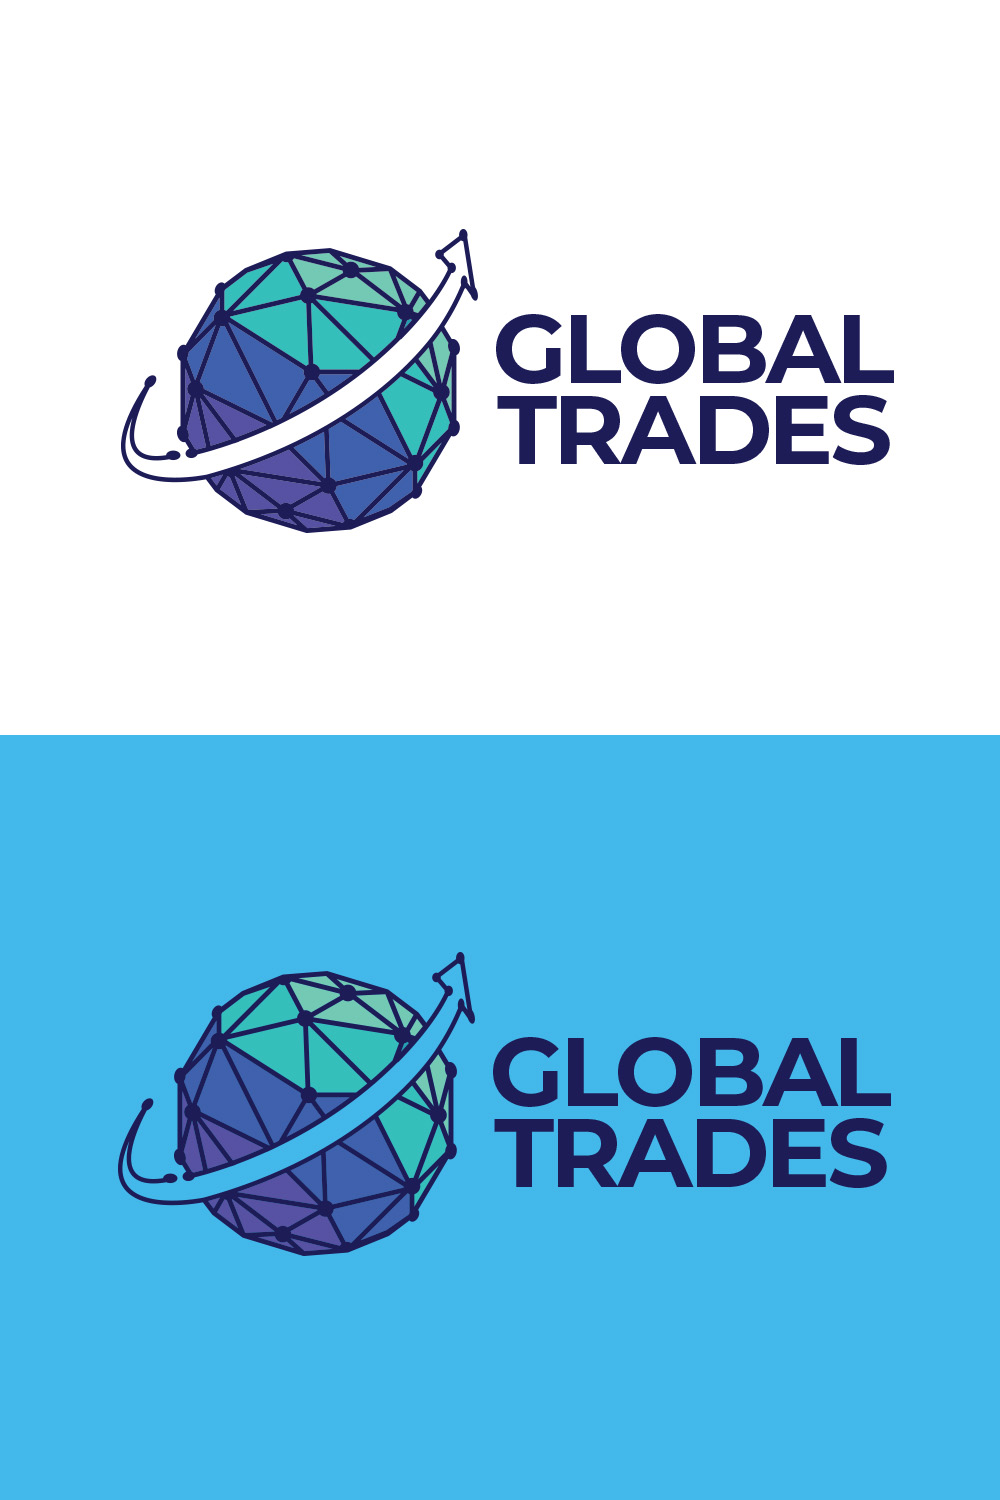 Global Trades Logo Design pinterest preview image.